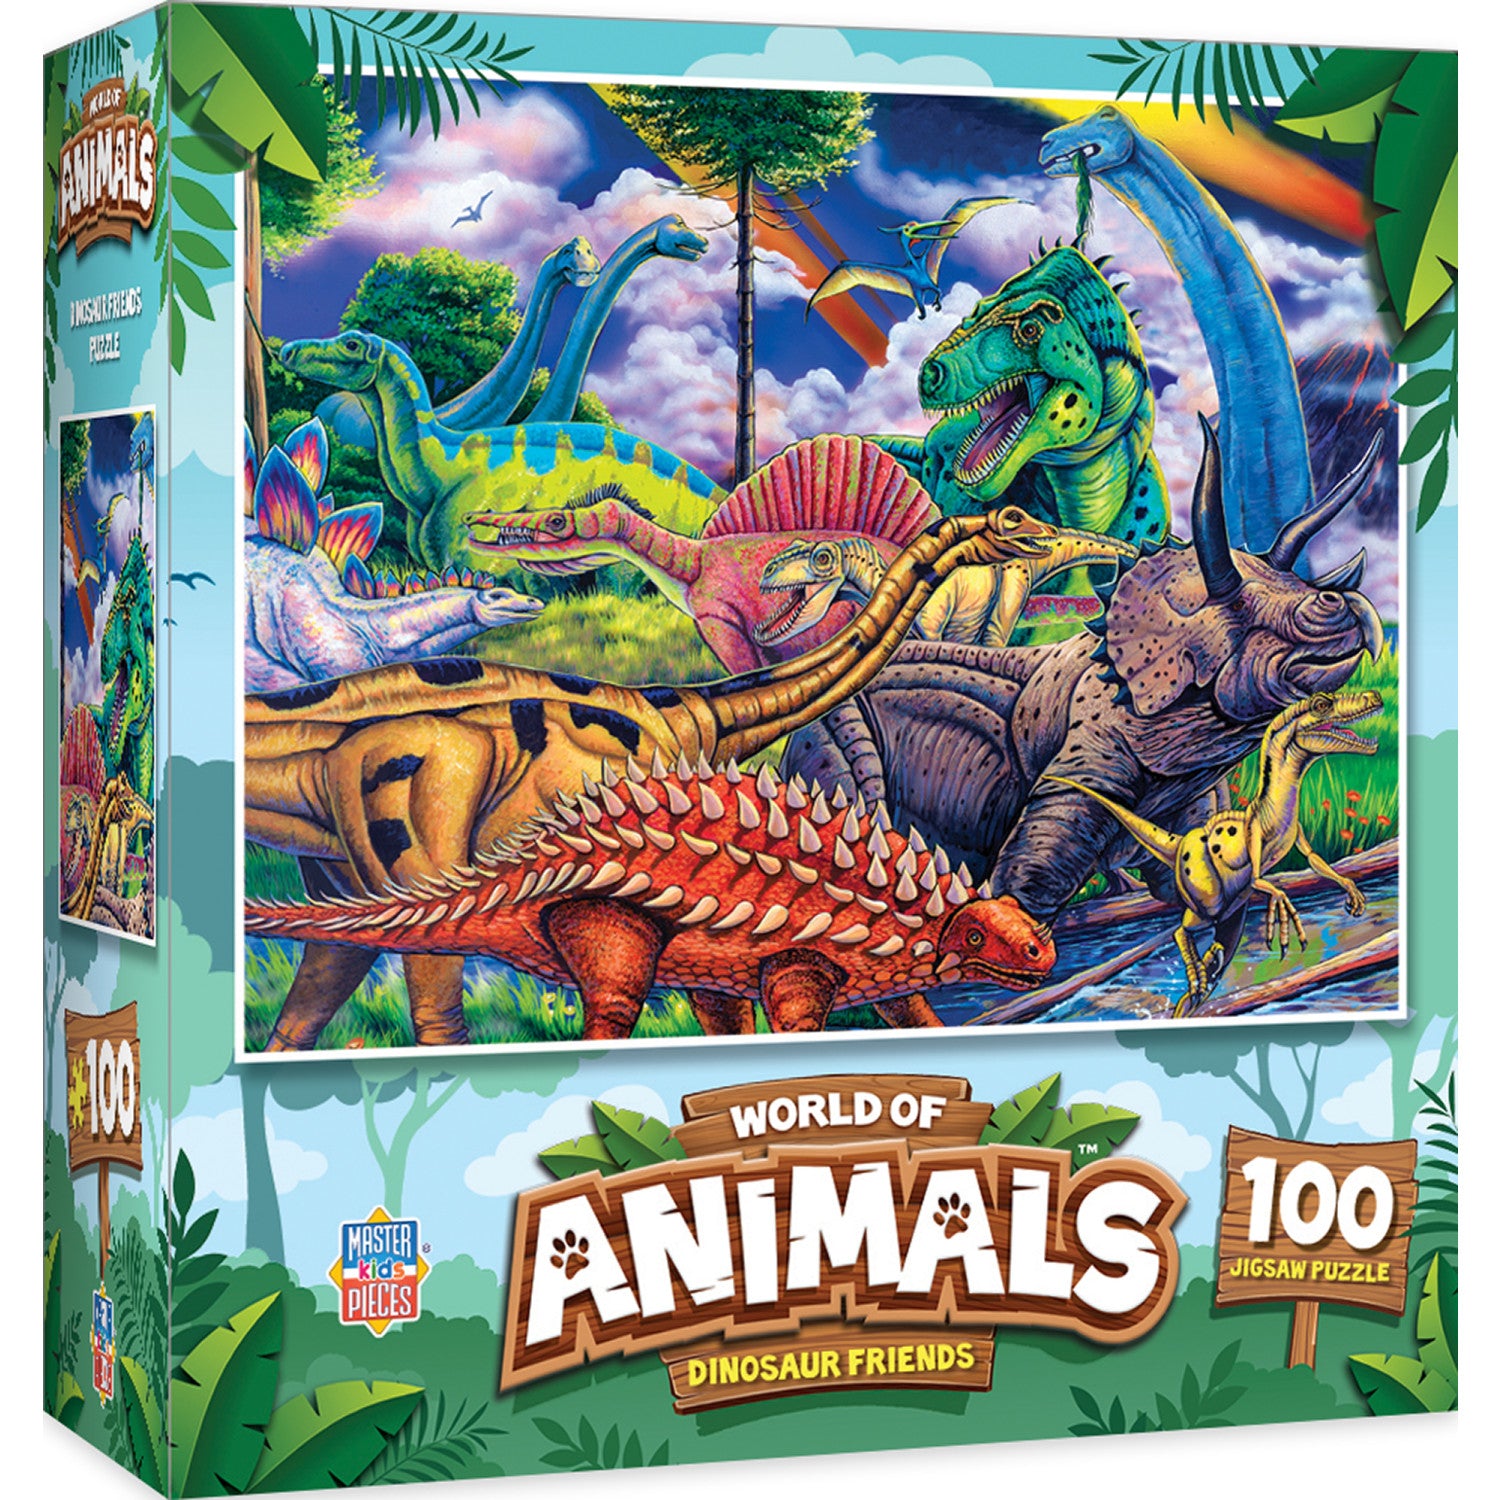 World of Animals - Dinosaur Friends 100 Piece Jigsaw Puzzle